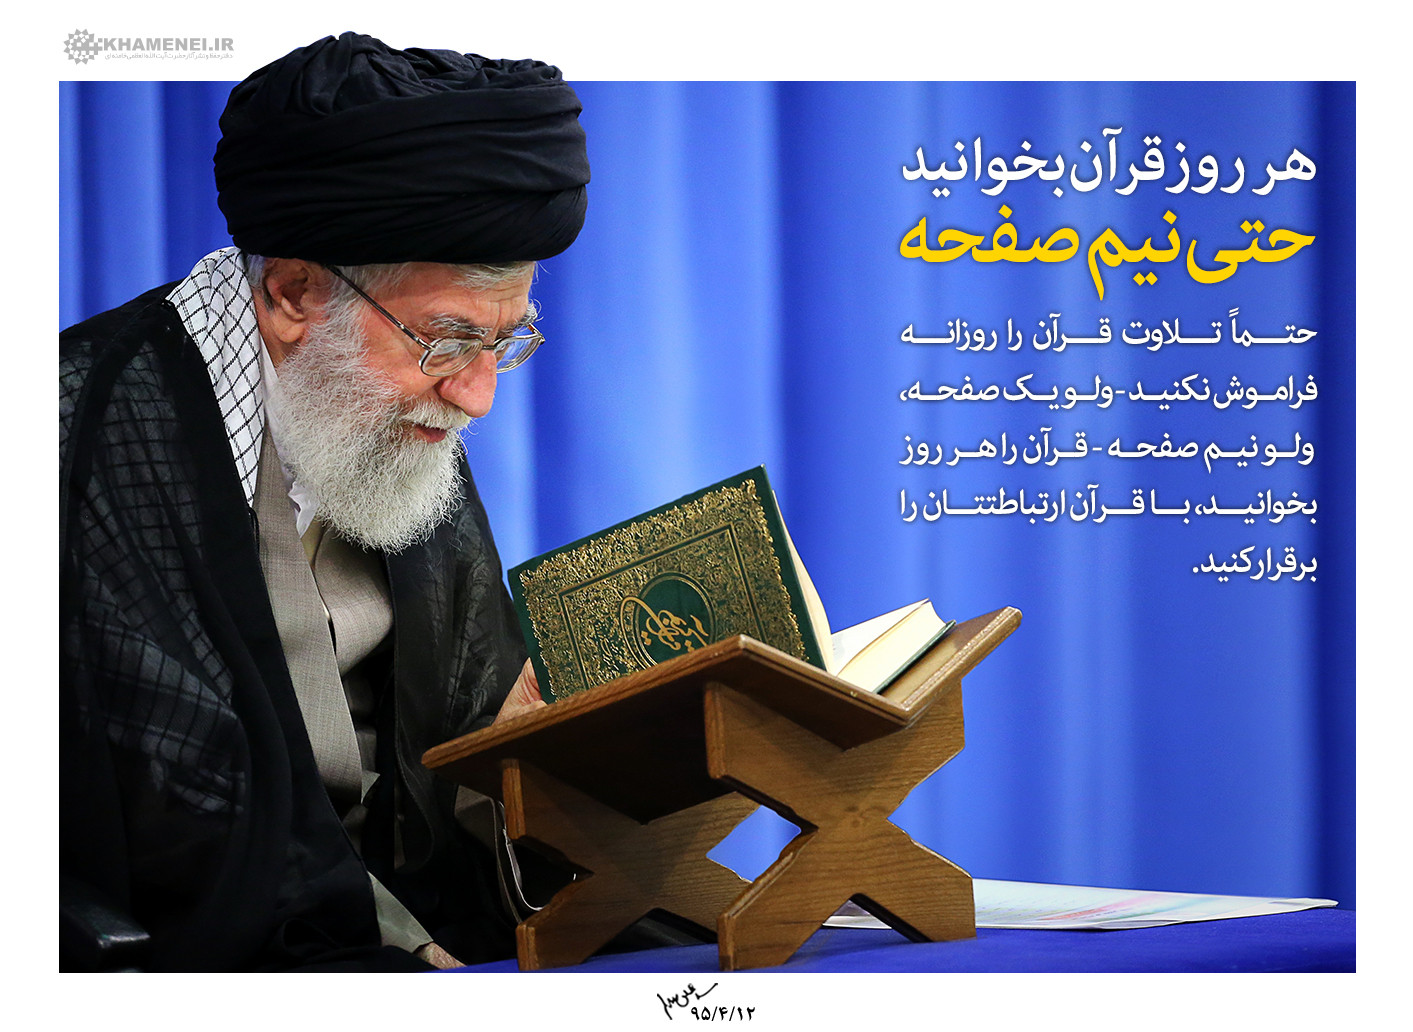 http://idc0-cdn0.khamenei.ir/ndata/news/33861/B/13950412_0333861.jpg